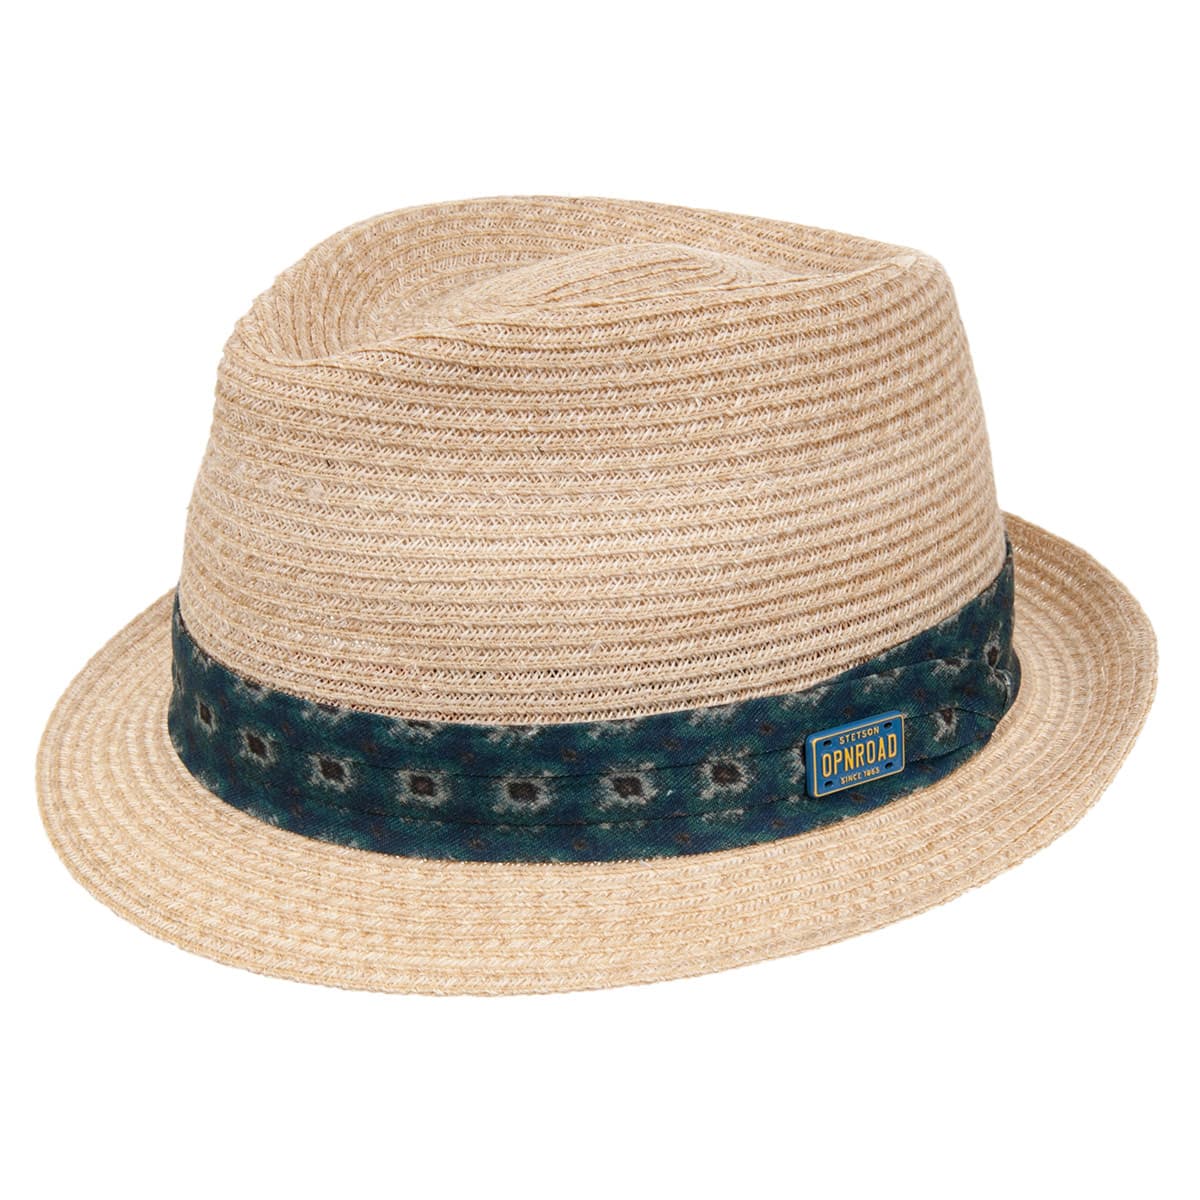 STETSON  Mens trilby raffia straw hat --> Online Hatshop for hats